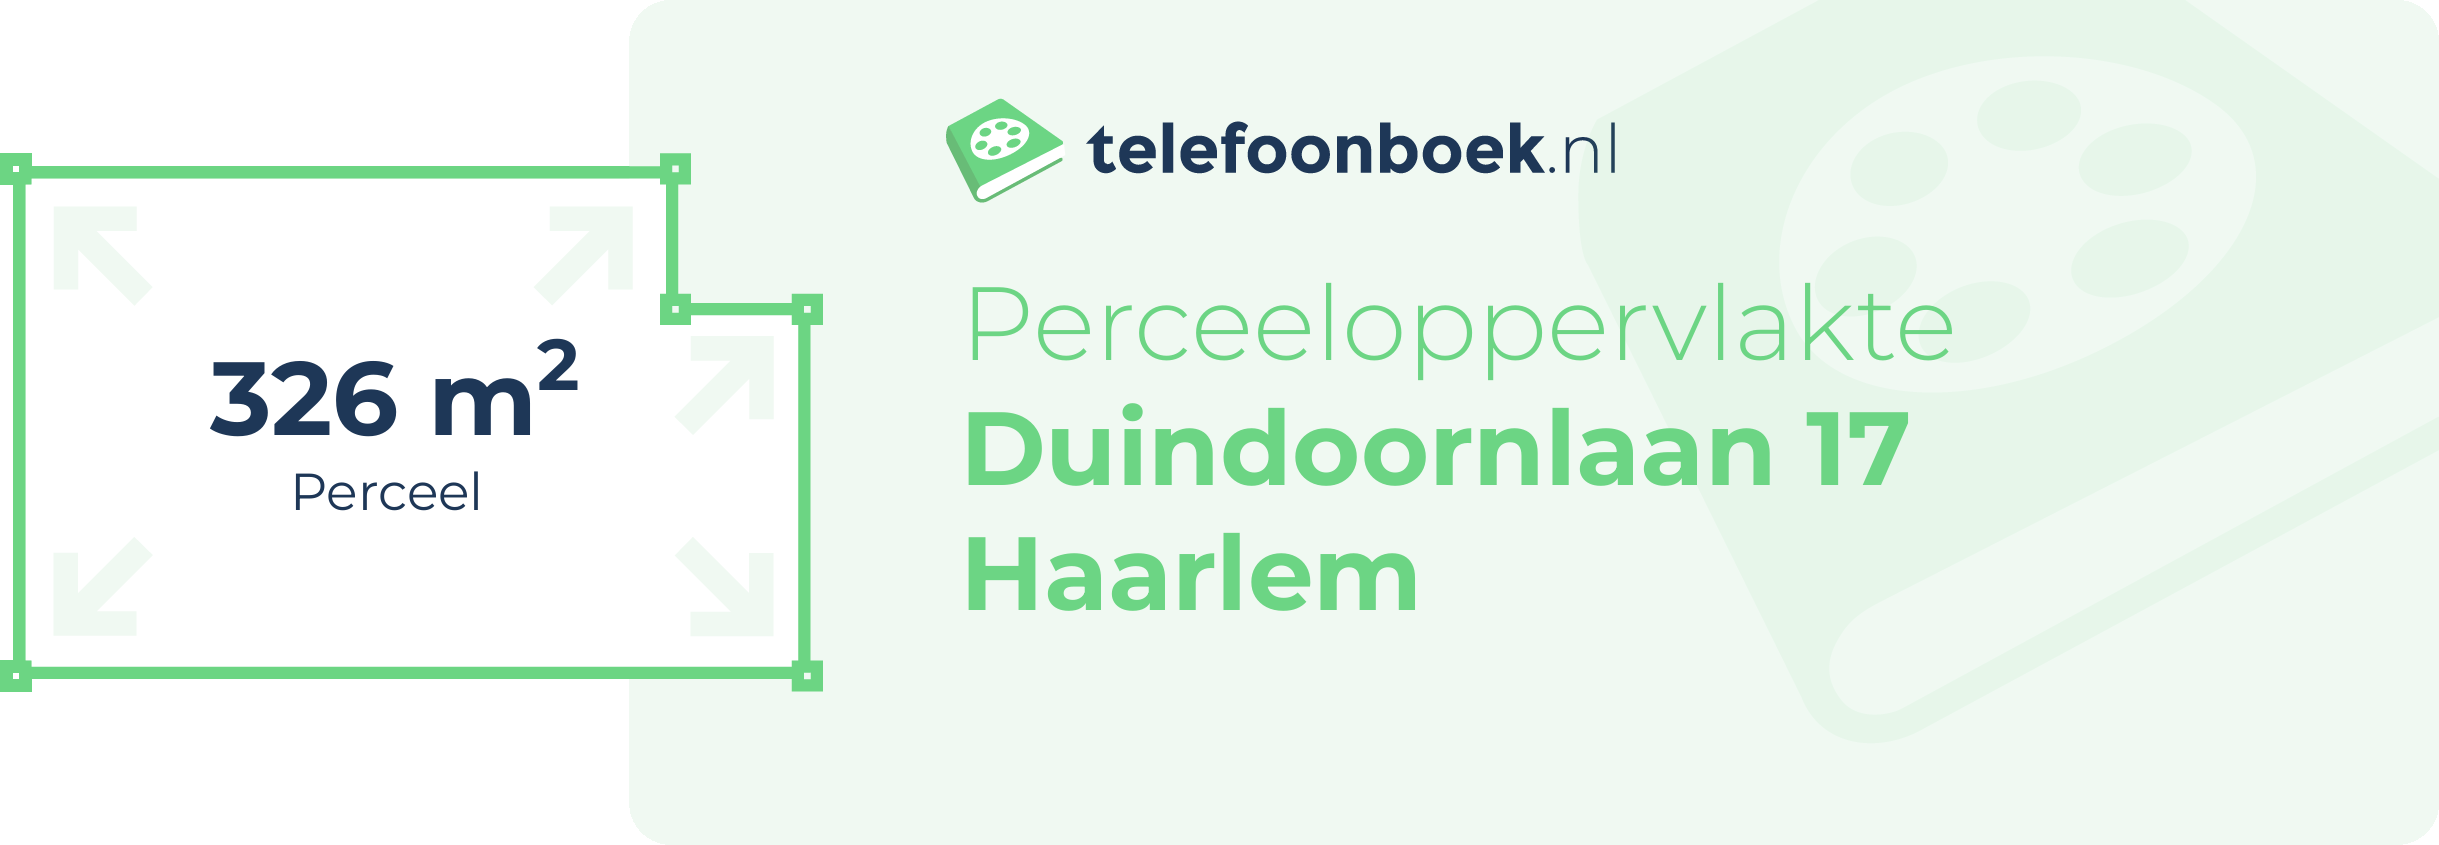 Perceeloppervlakte Duindoornlaan 17 Haarlem